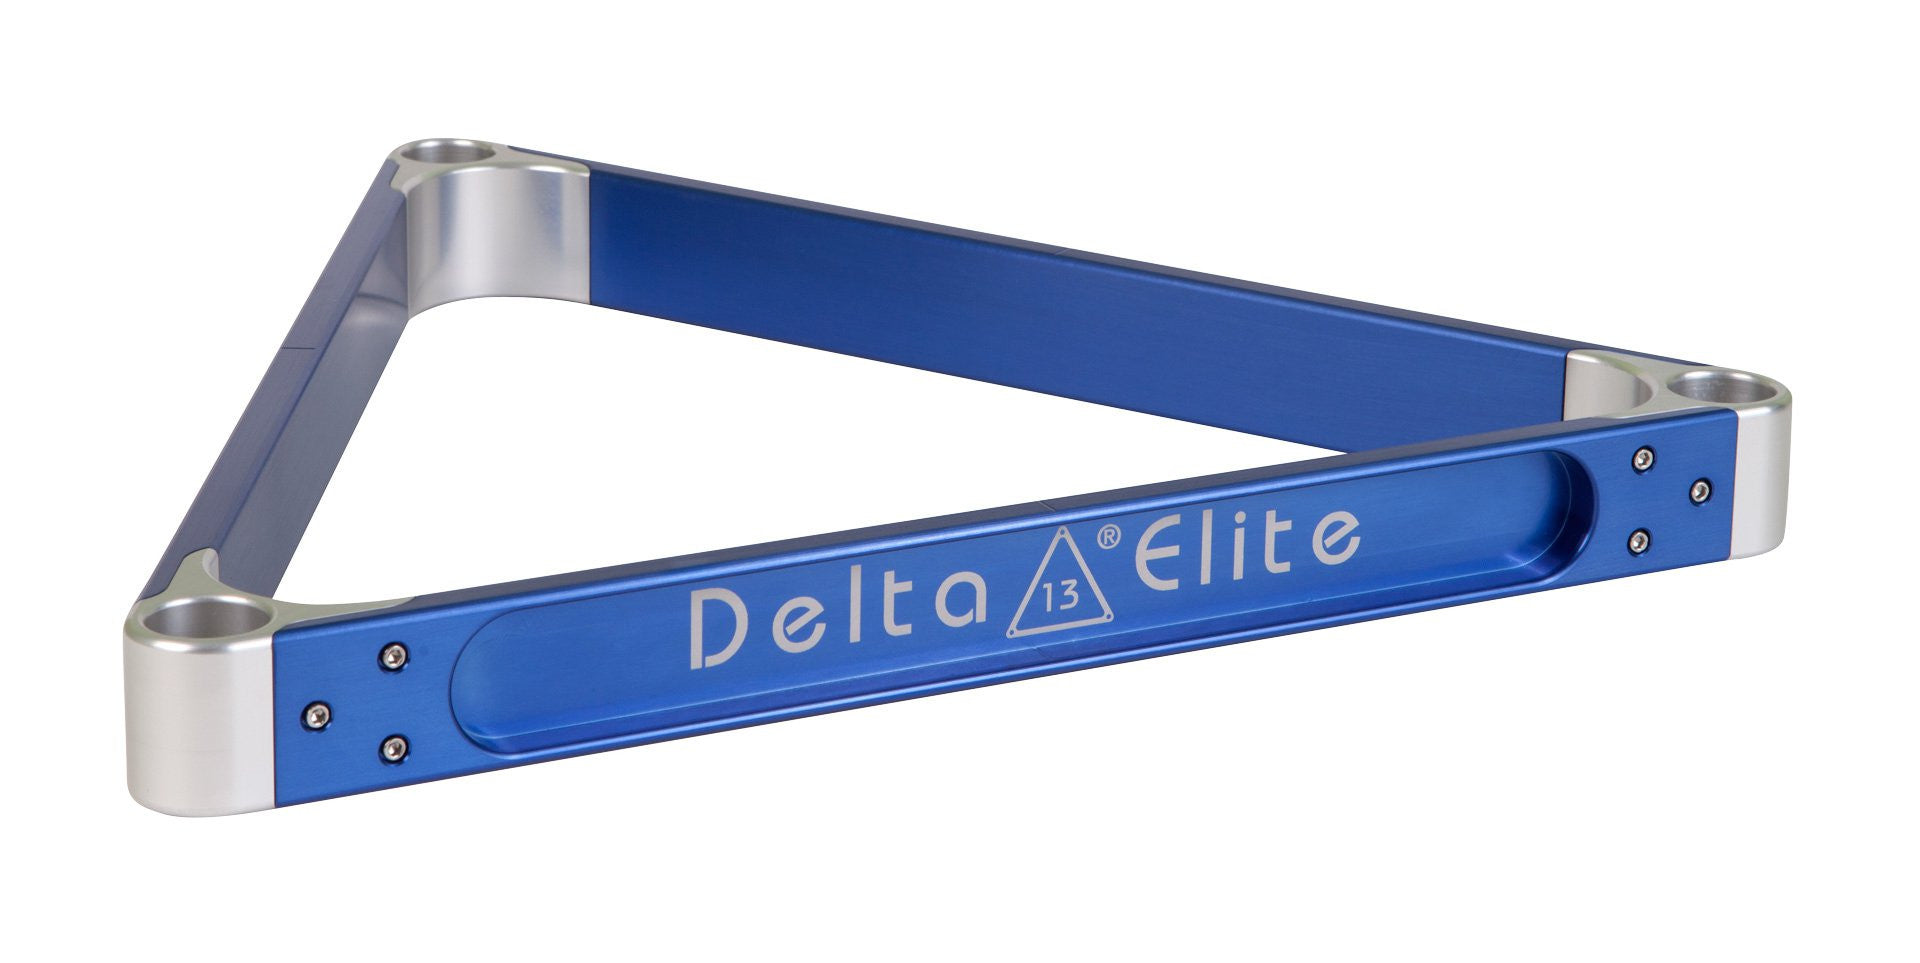 Delta-13 Elite - Delta-13 - 4